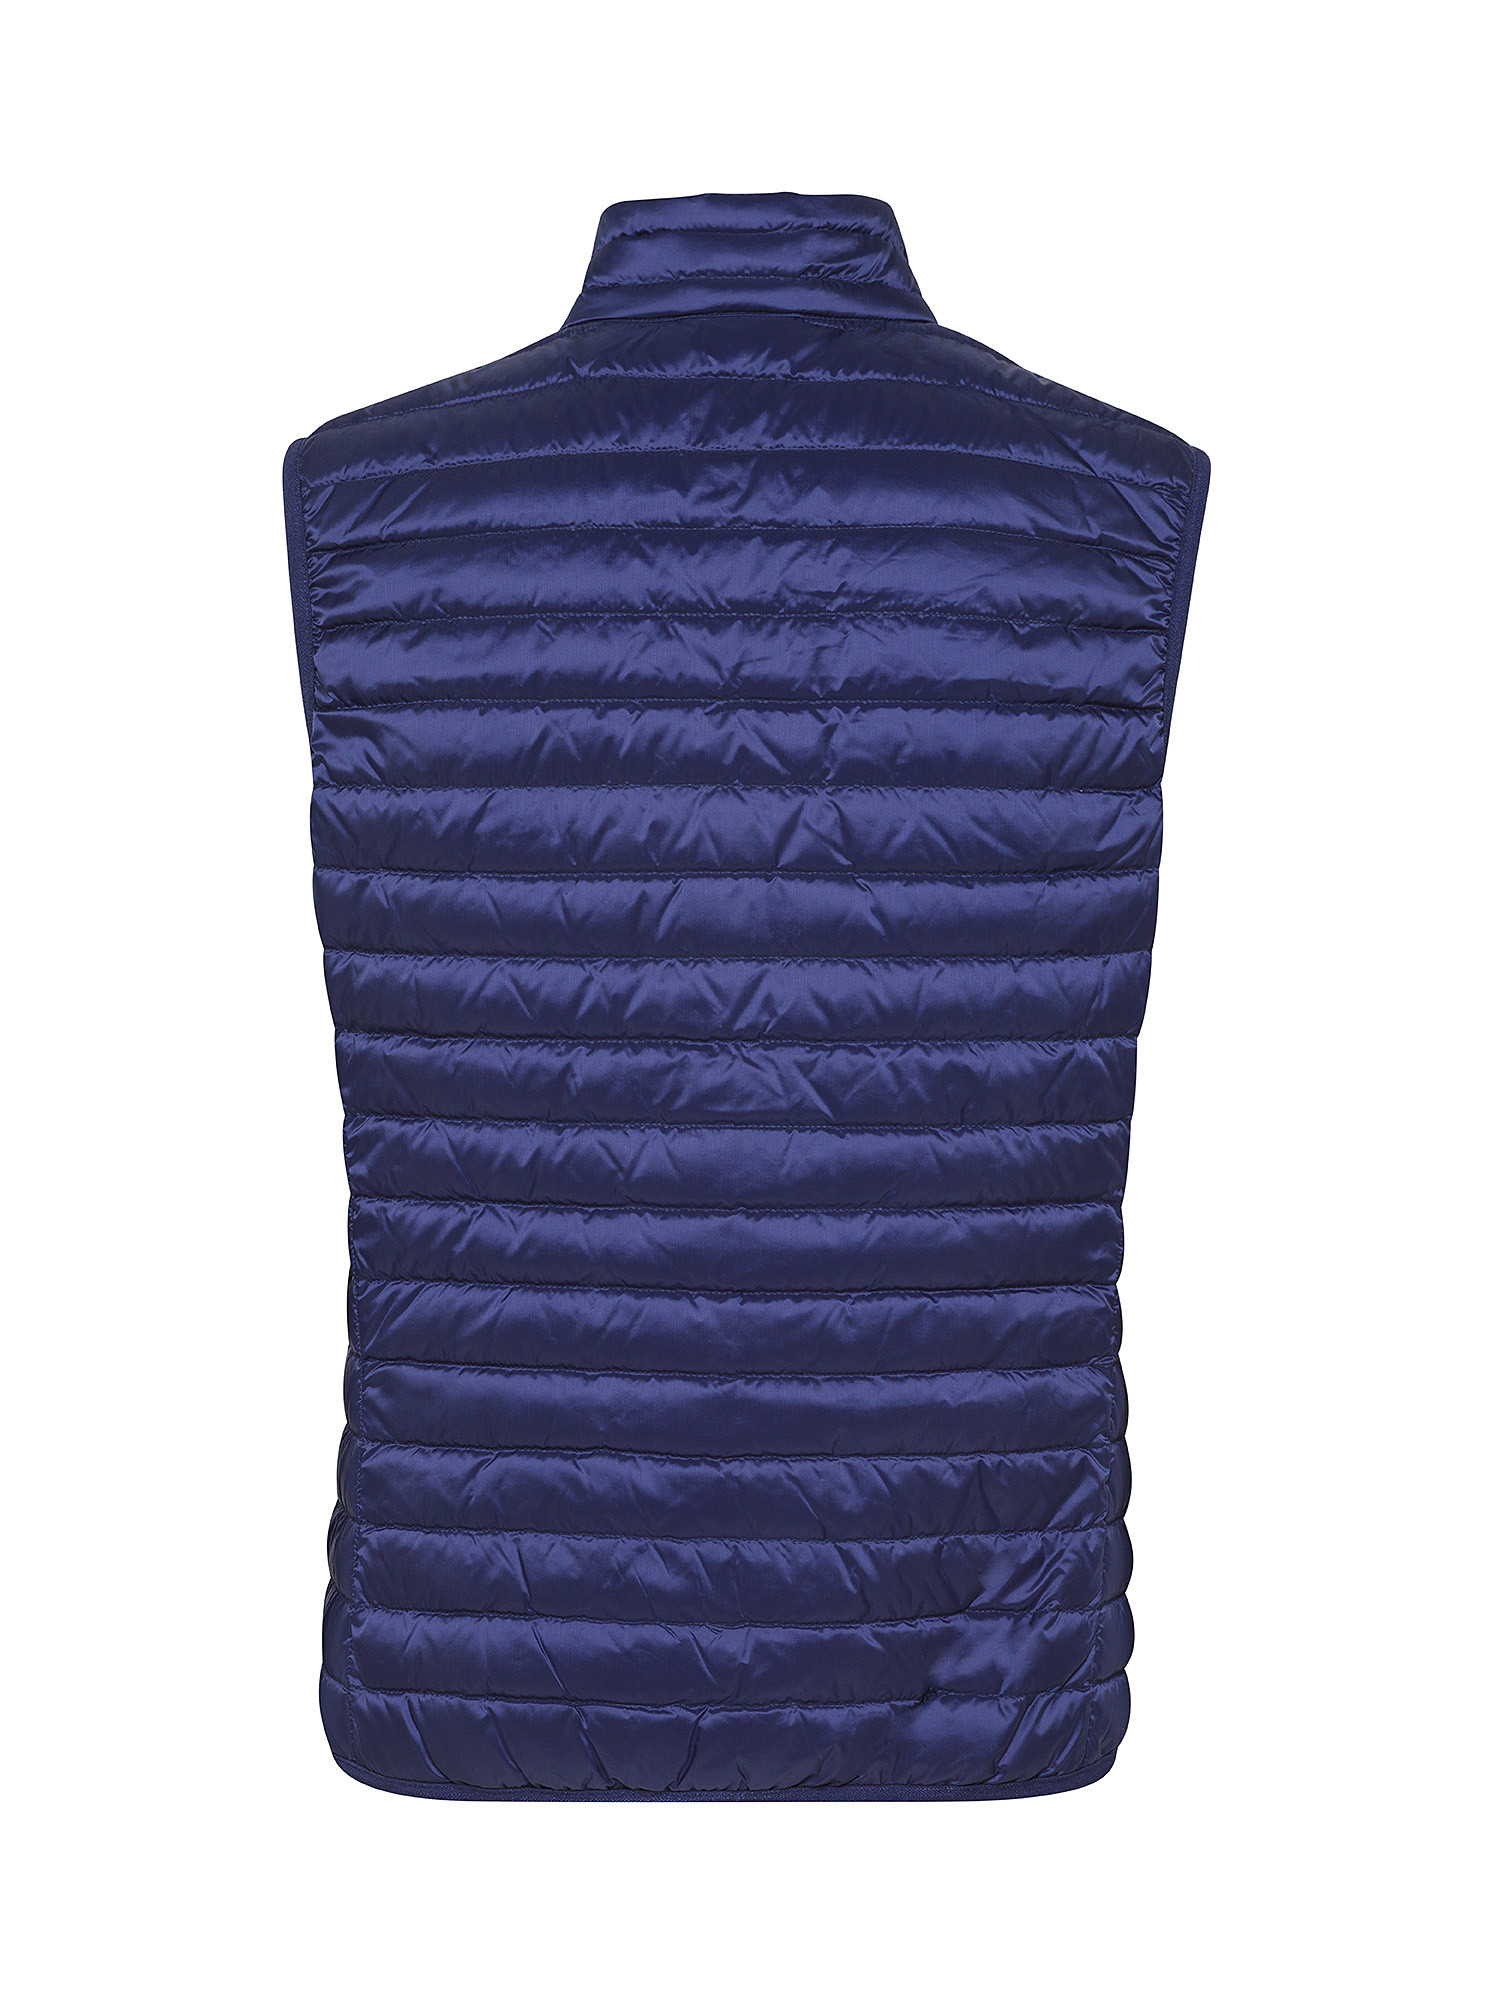 Ciesse Piumini - Melvin vest in nylon, Blue, large image number 1